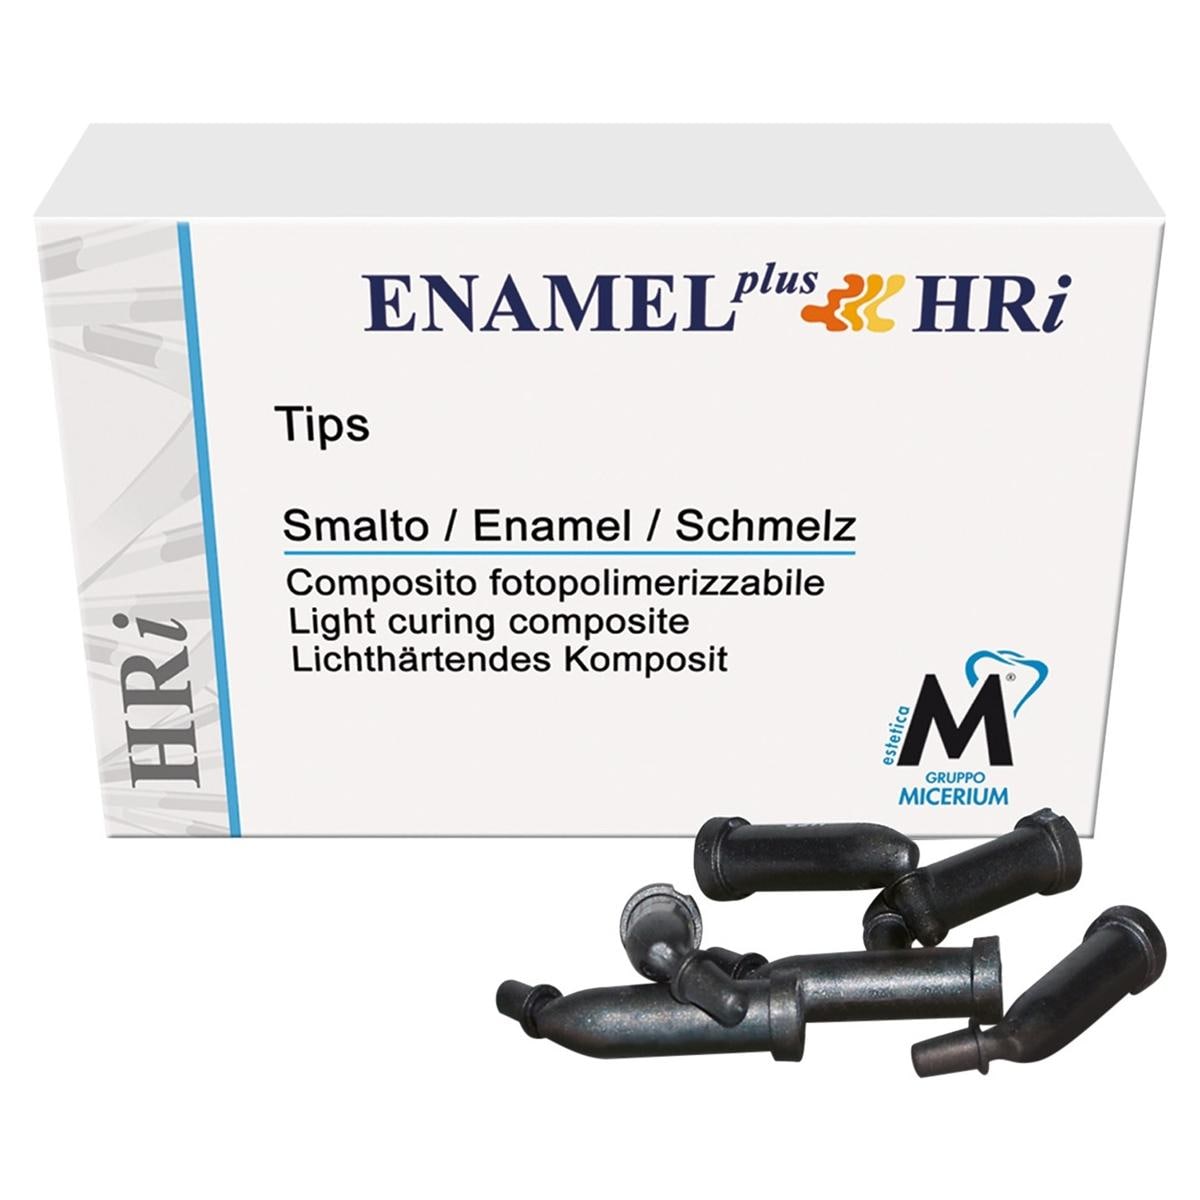 Enamel Plus HRi - tips - UD 0, Dentine